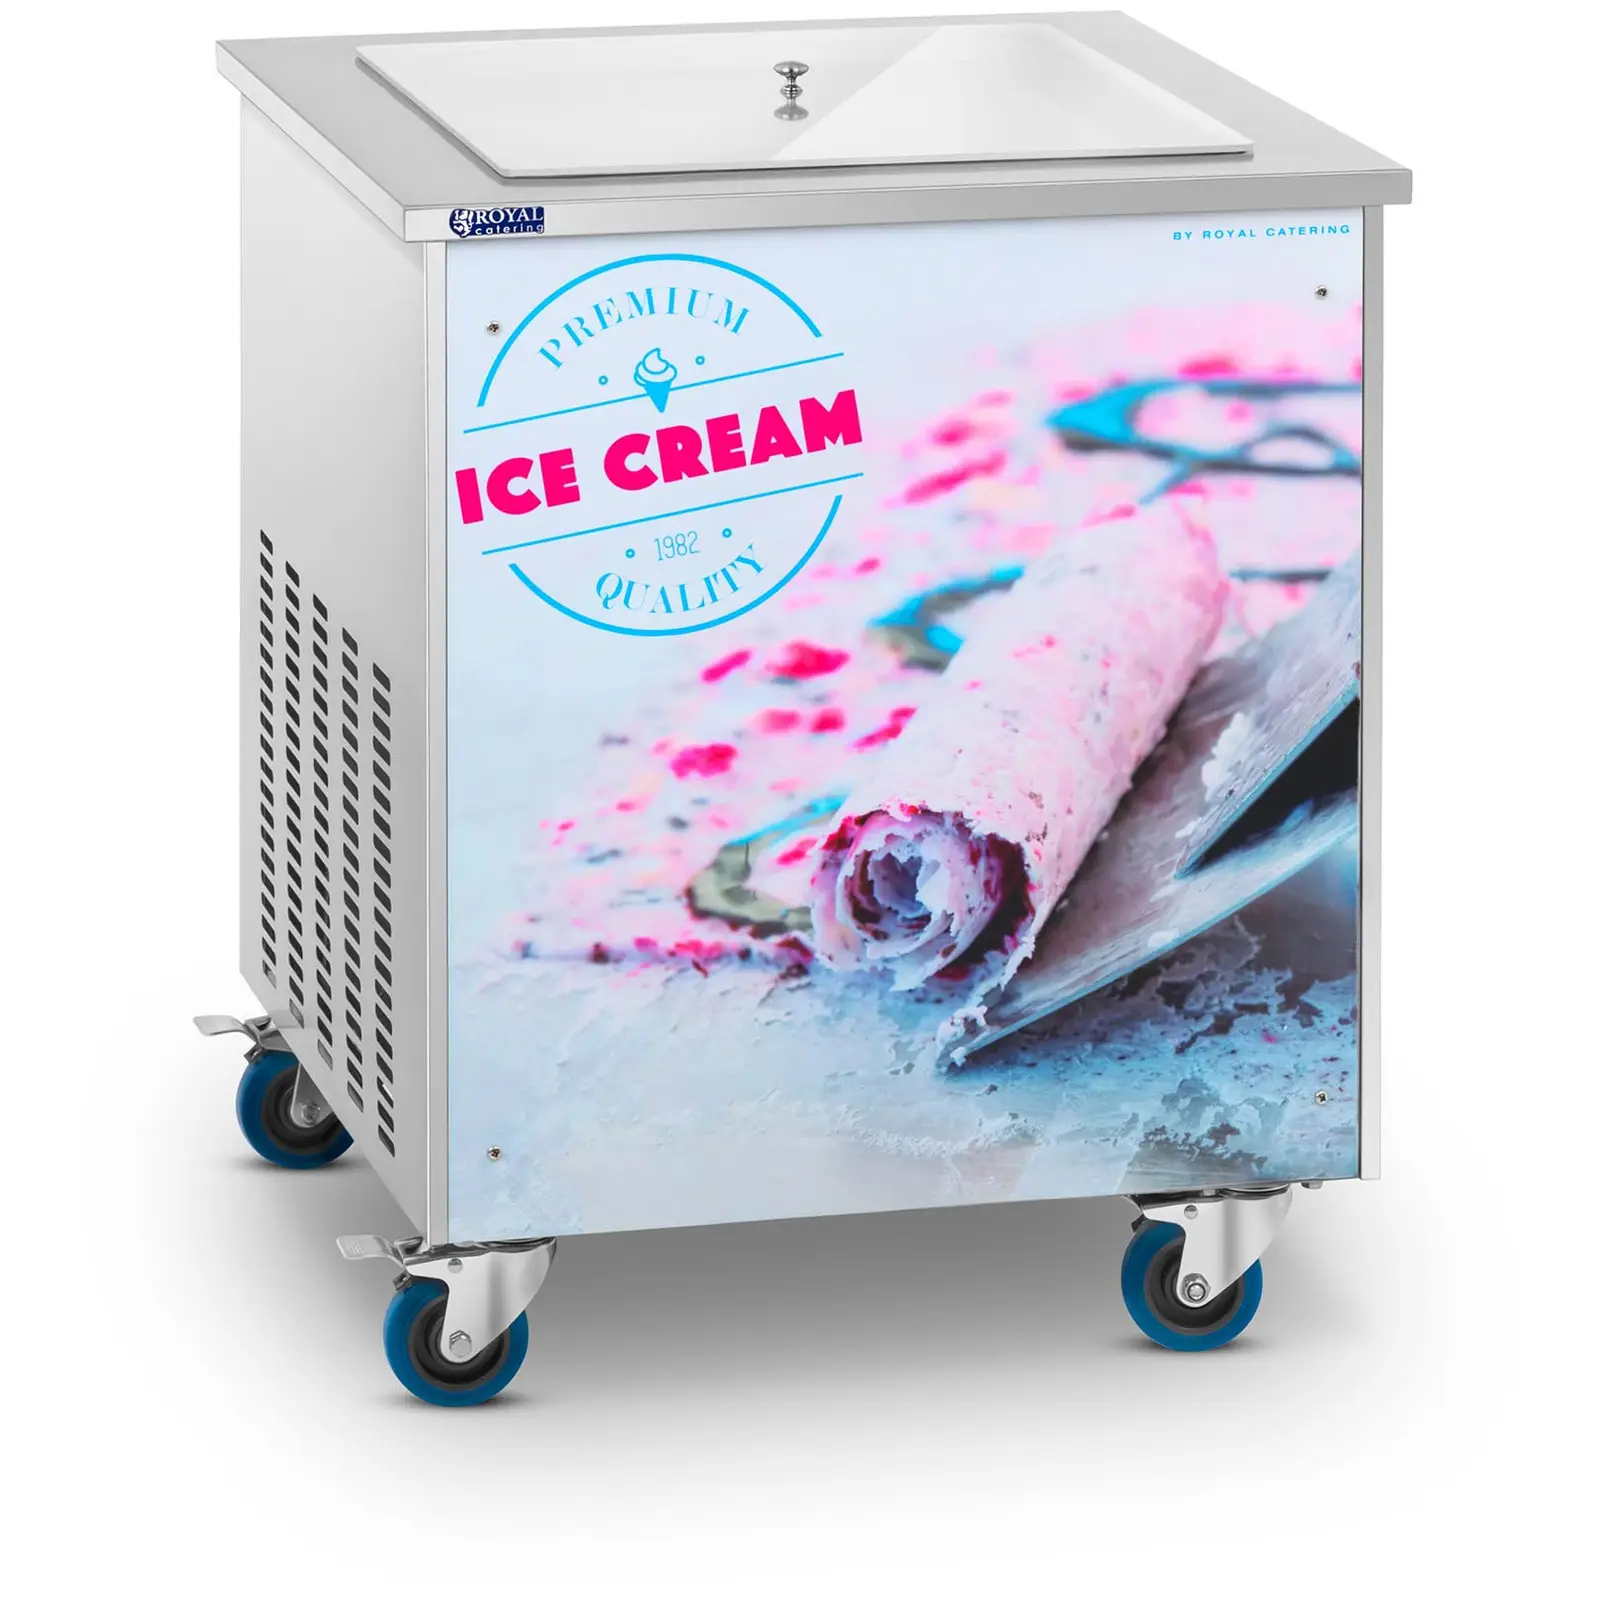 Fried Ice Cream Machine - 50 x 50 cm